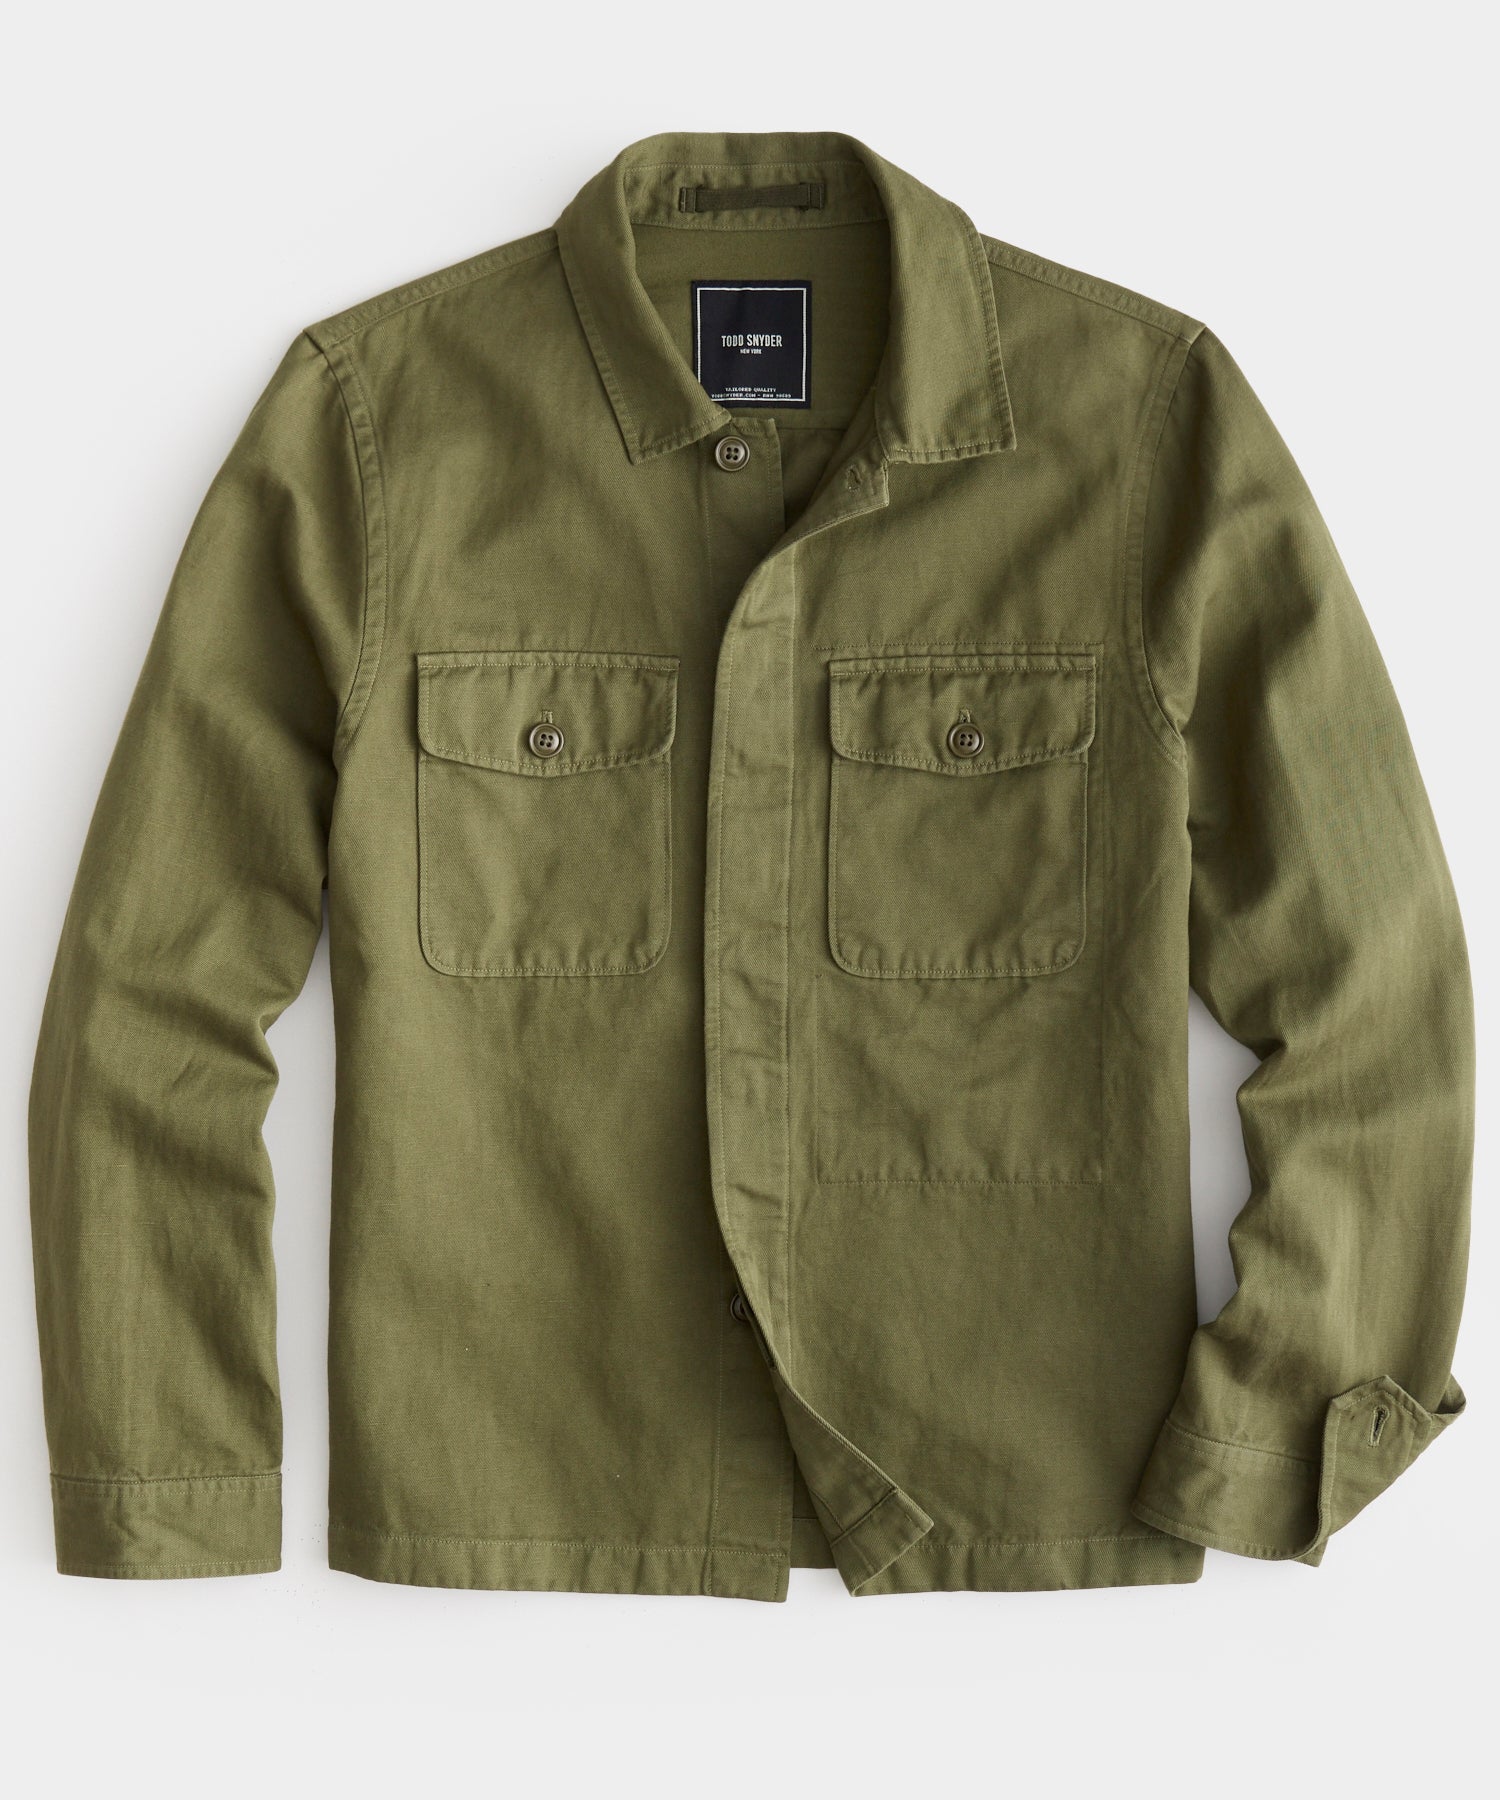 4.20 Shop The Look: Cotton-Linen Officer Jacket